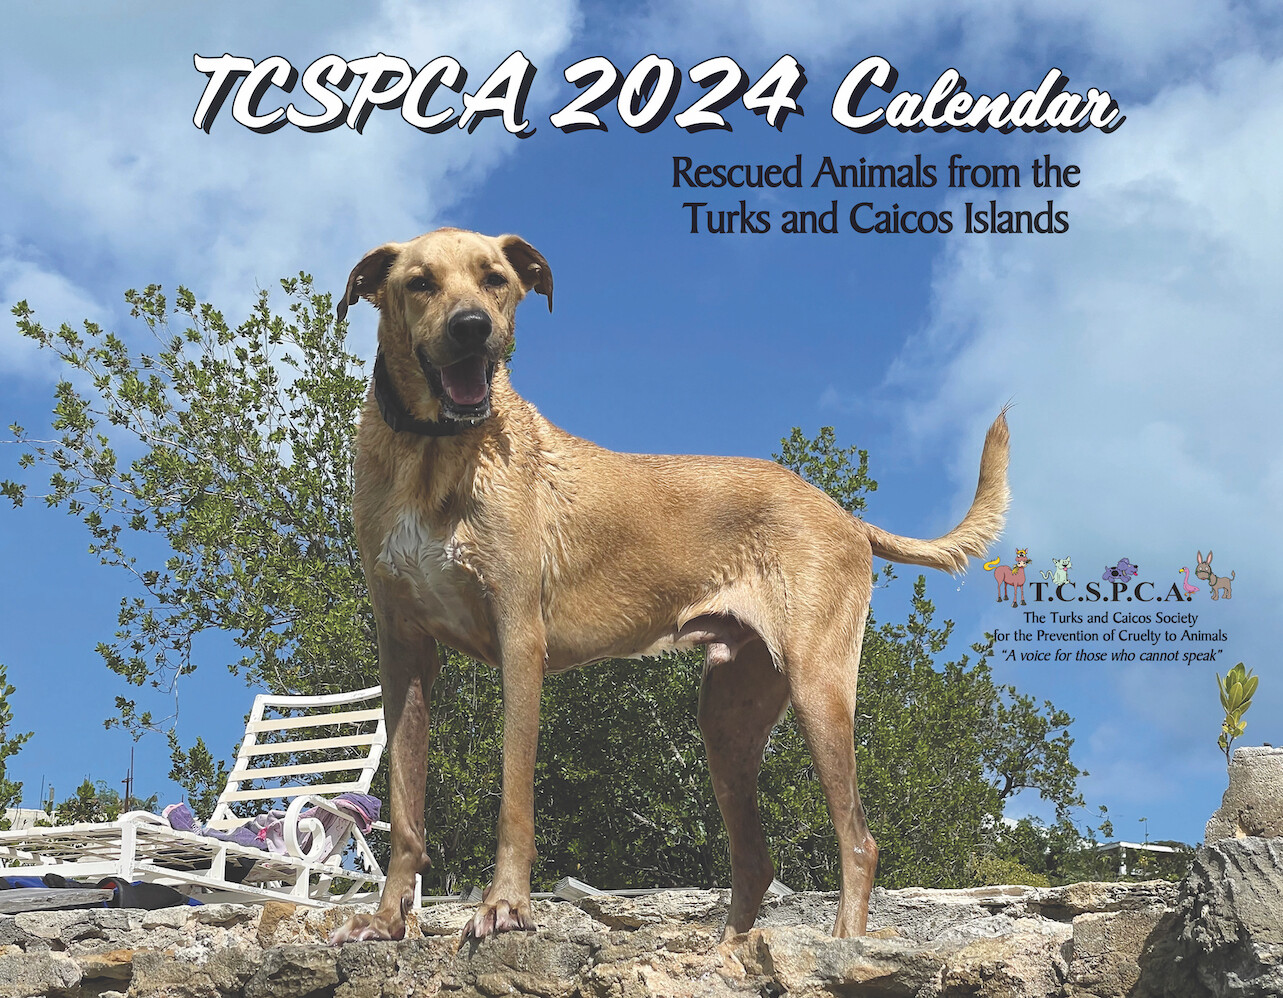 NEW TCSPCA 2024 CALENDAR